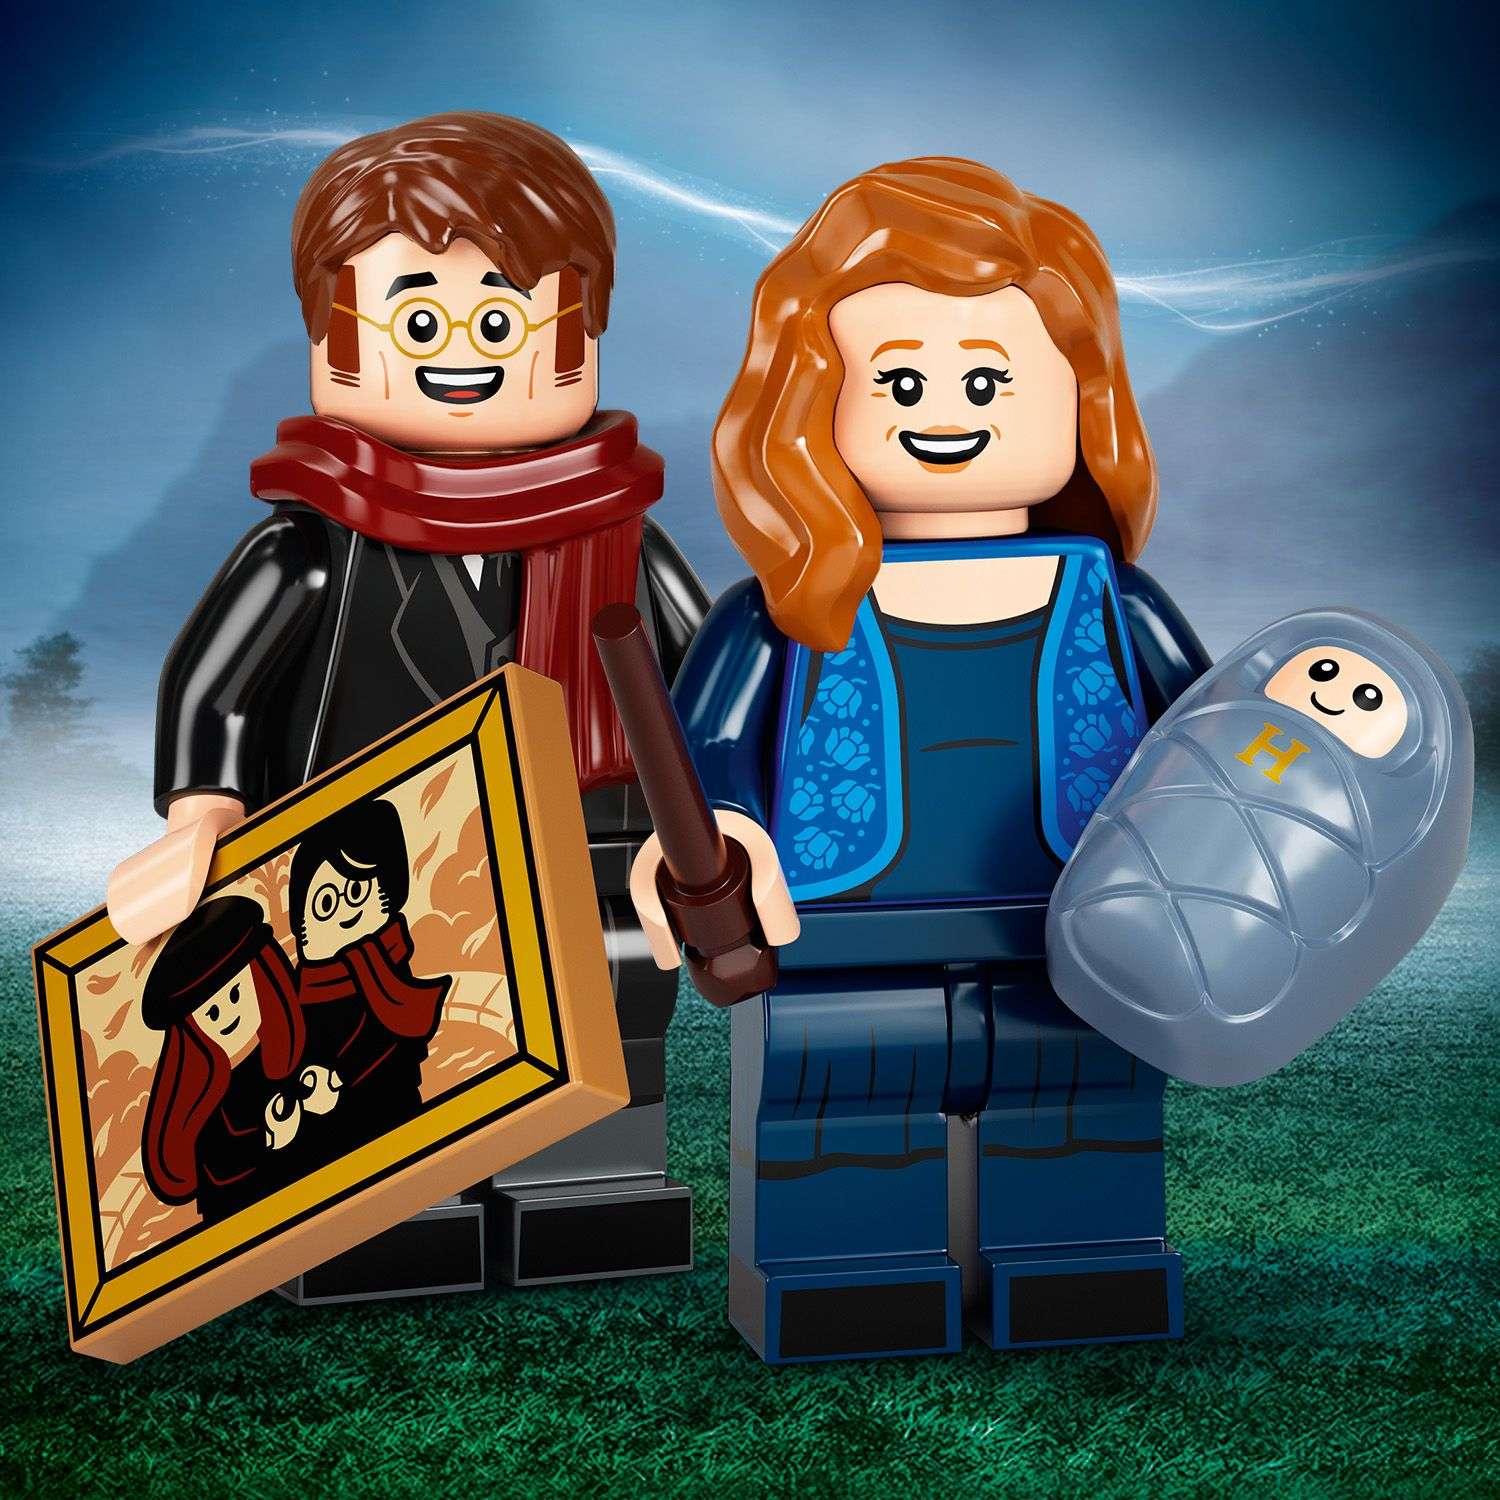 Конструктор LEGO Minifigures Harry Potter 2 71028 - фото 12